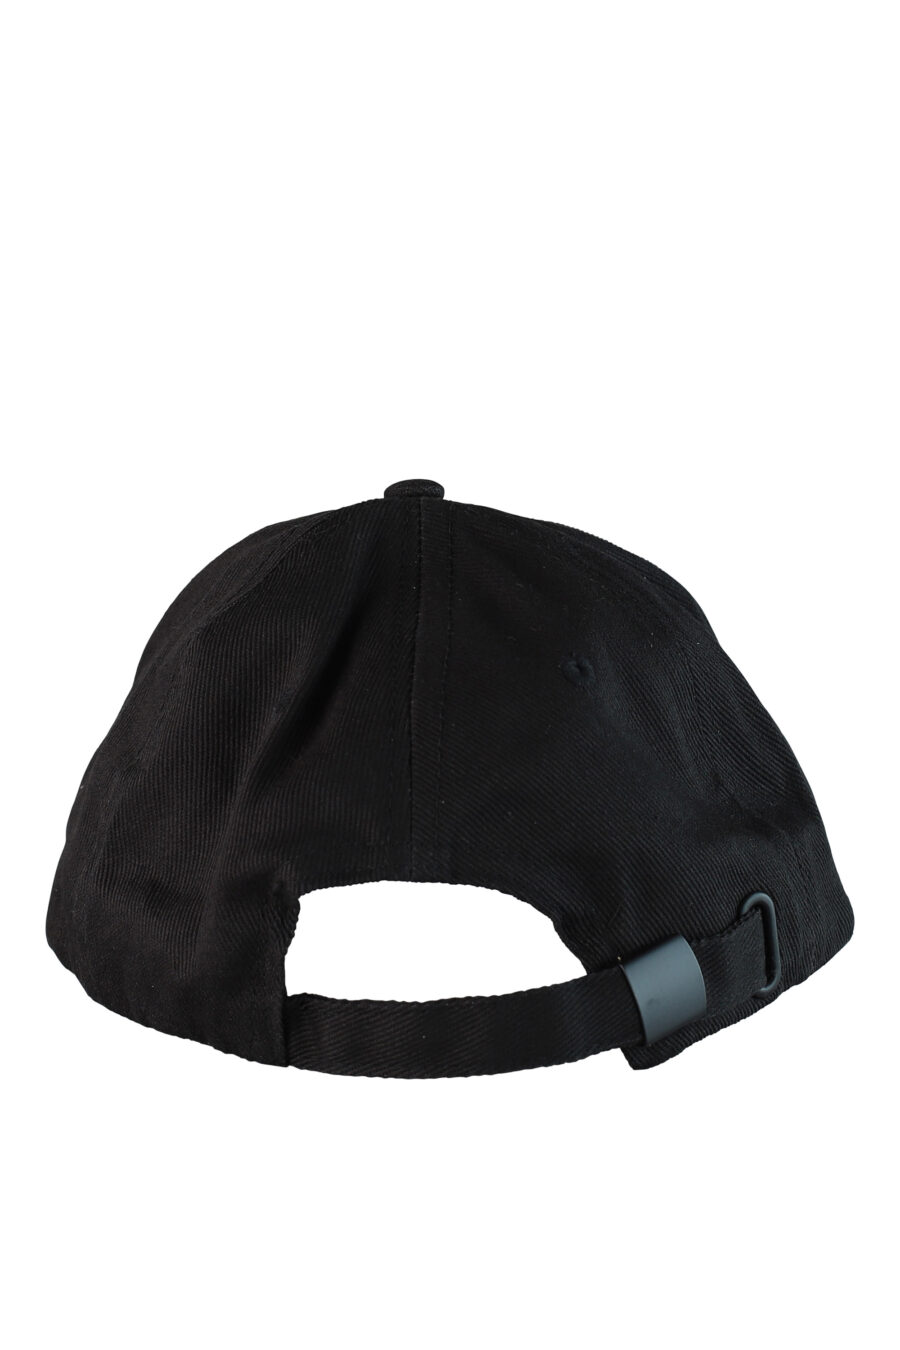 Schwarze Kappe mit weißem kreisförmigen Logo - IMG 0509